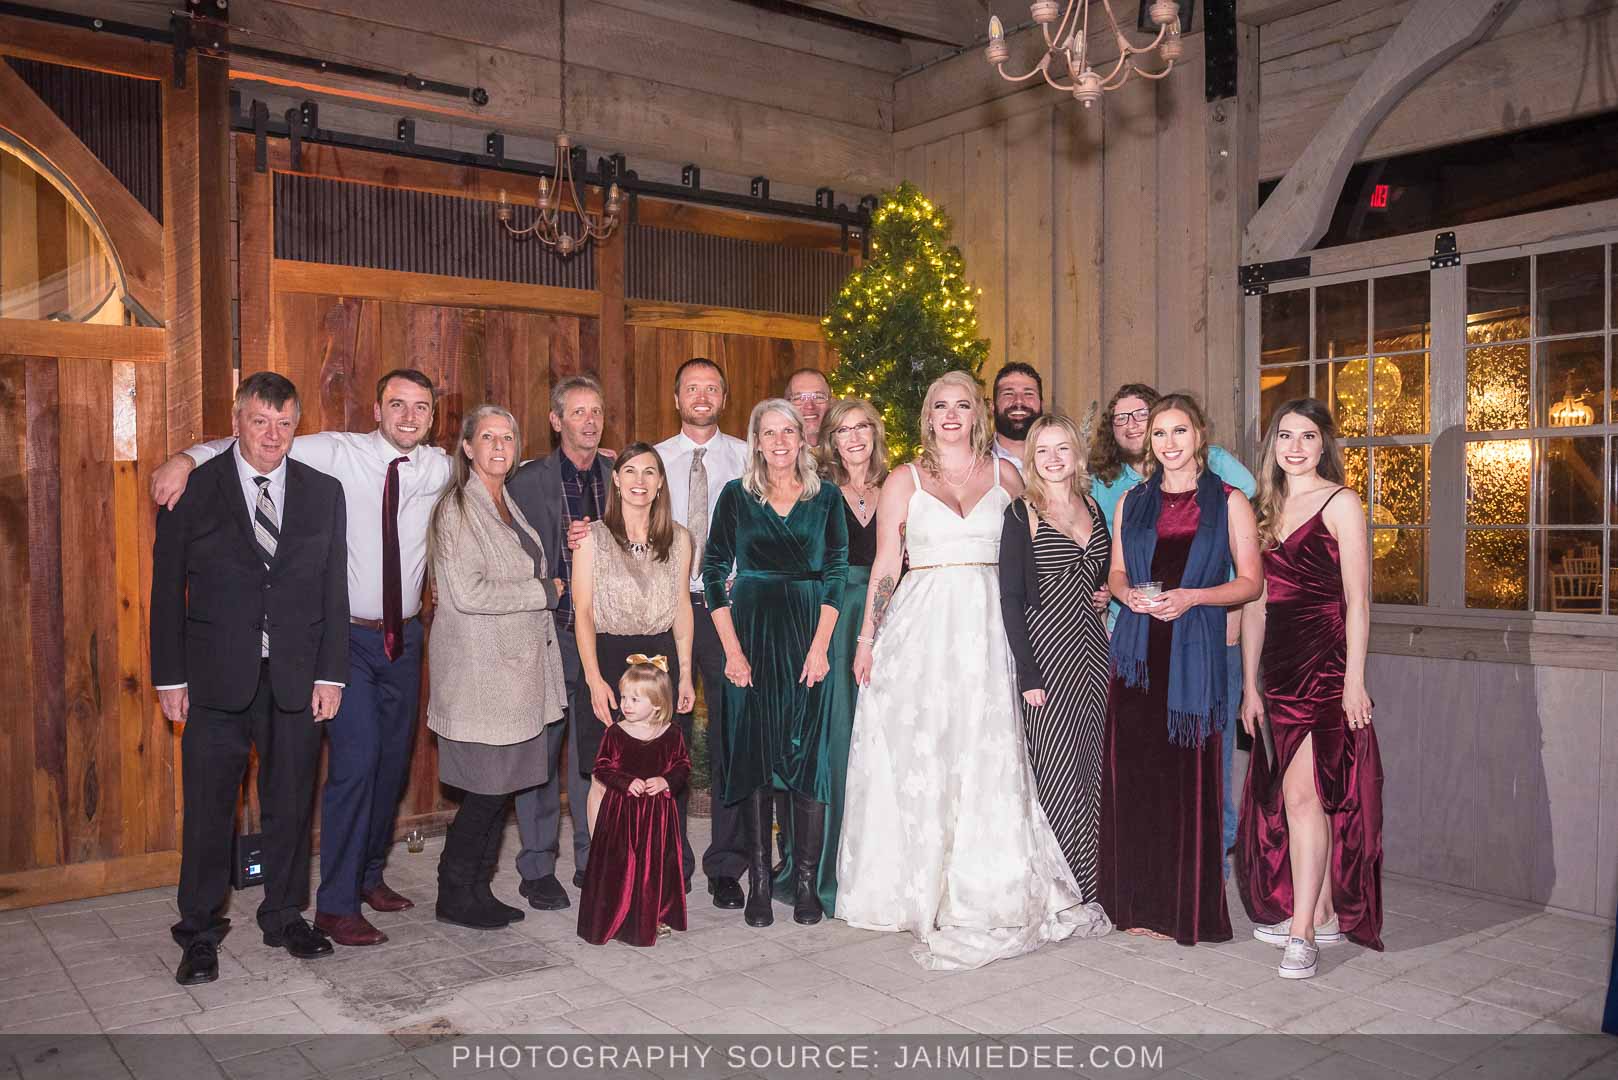 Rocky's Lake Estate Wedding Venue - reception - group photo